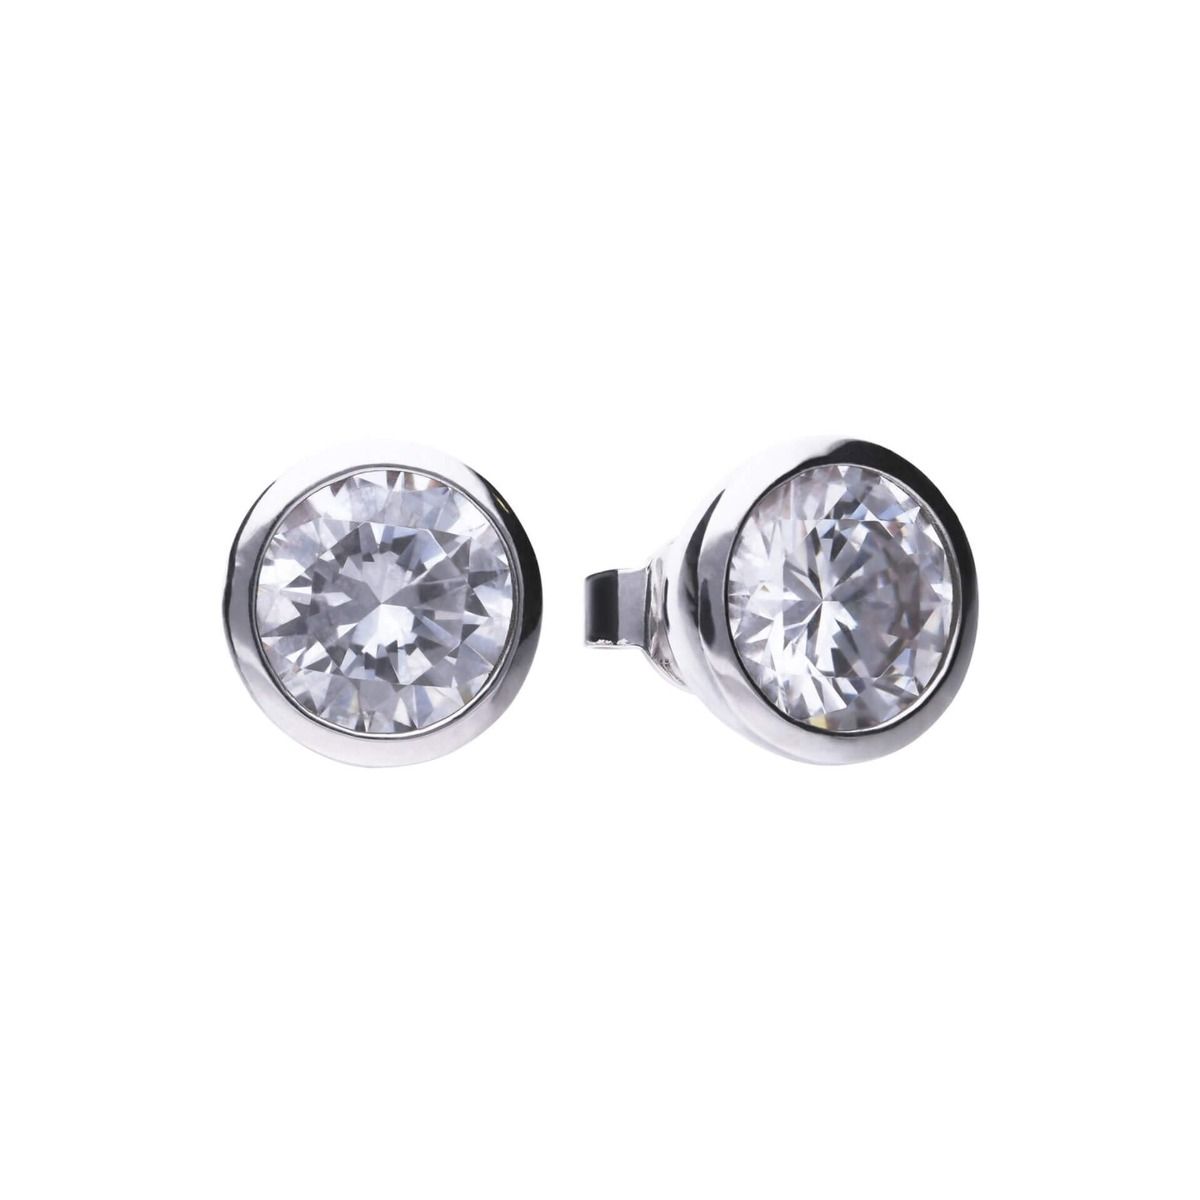 Diamonfire silver and cubic zirconia stud earrings 0.25